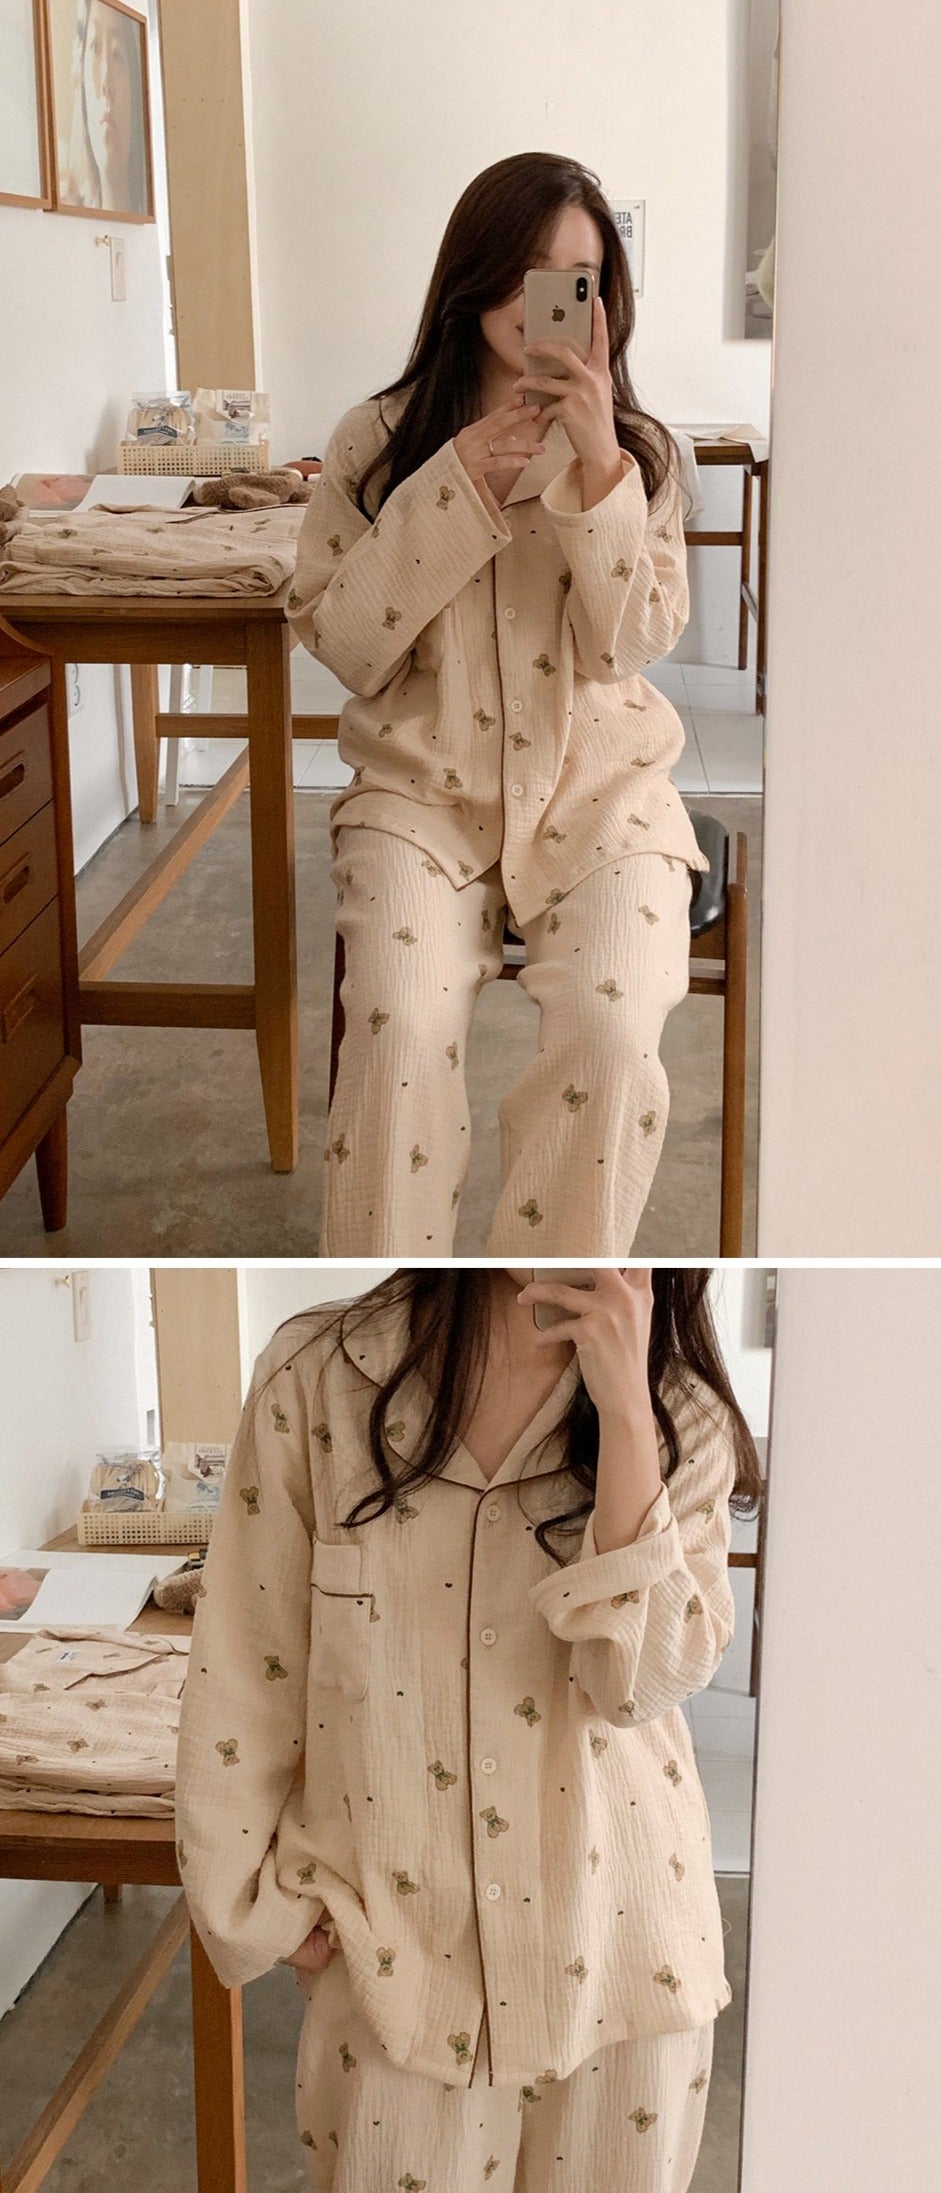 Mandy Bear Crinkled Cotton Pajamas collared